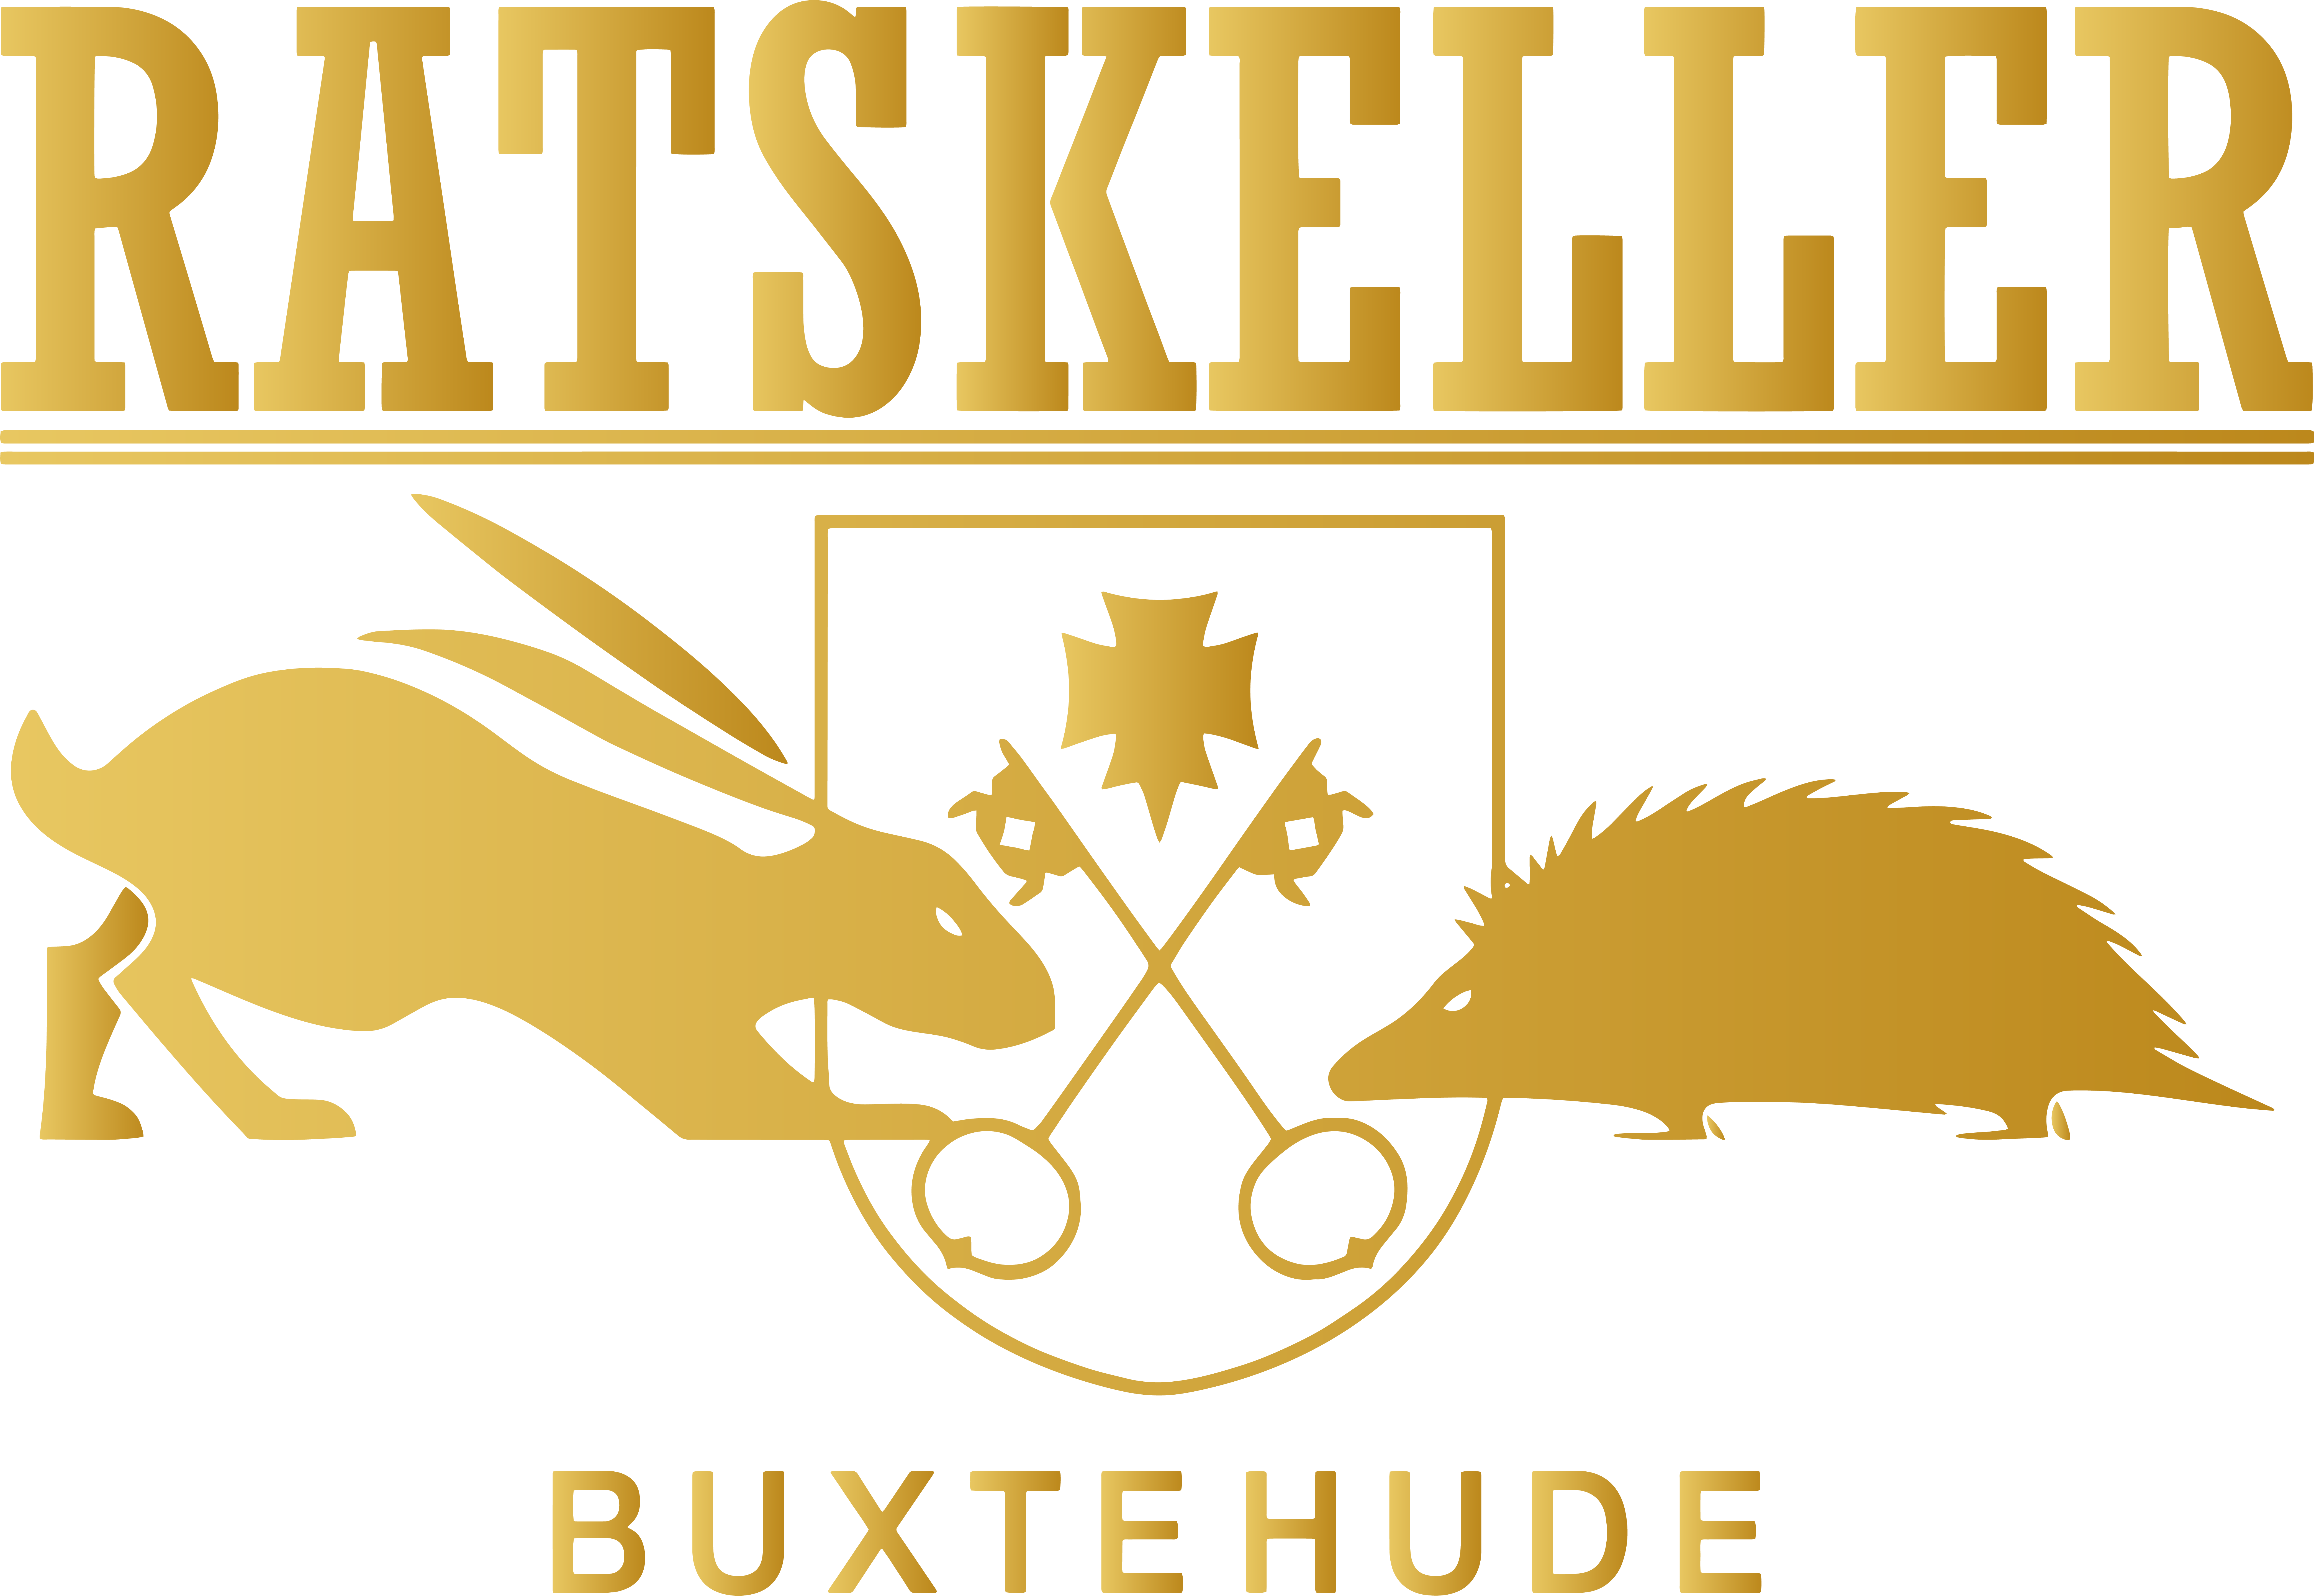 Ratskeller Buxtehude